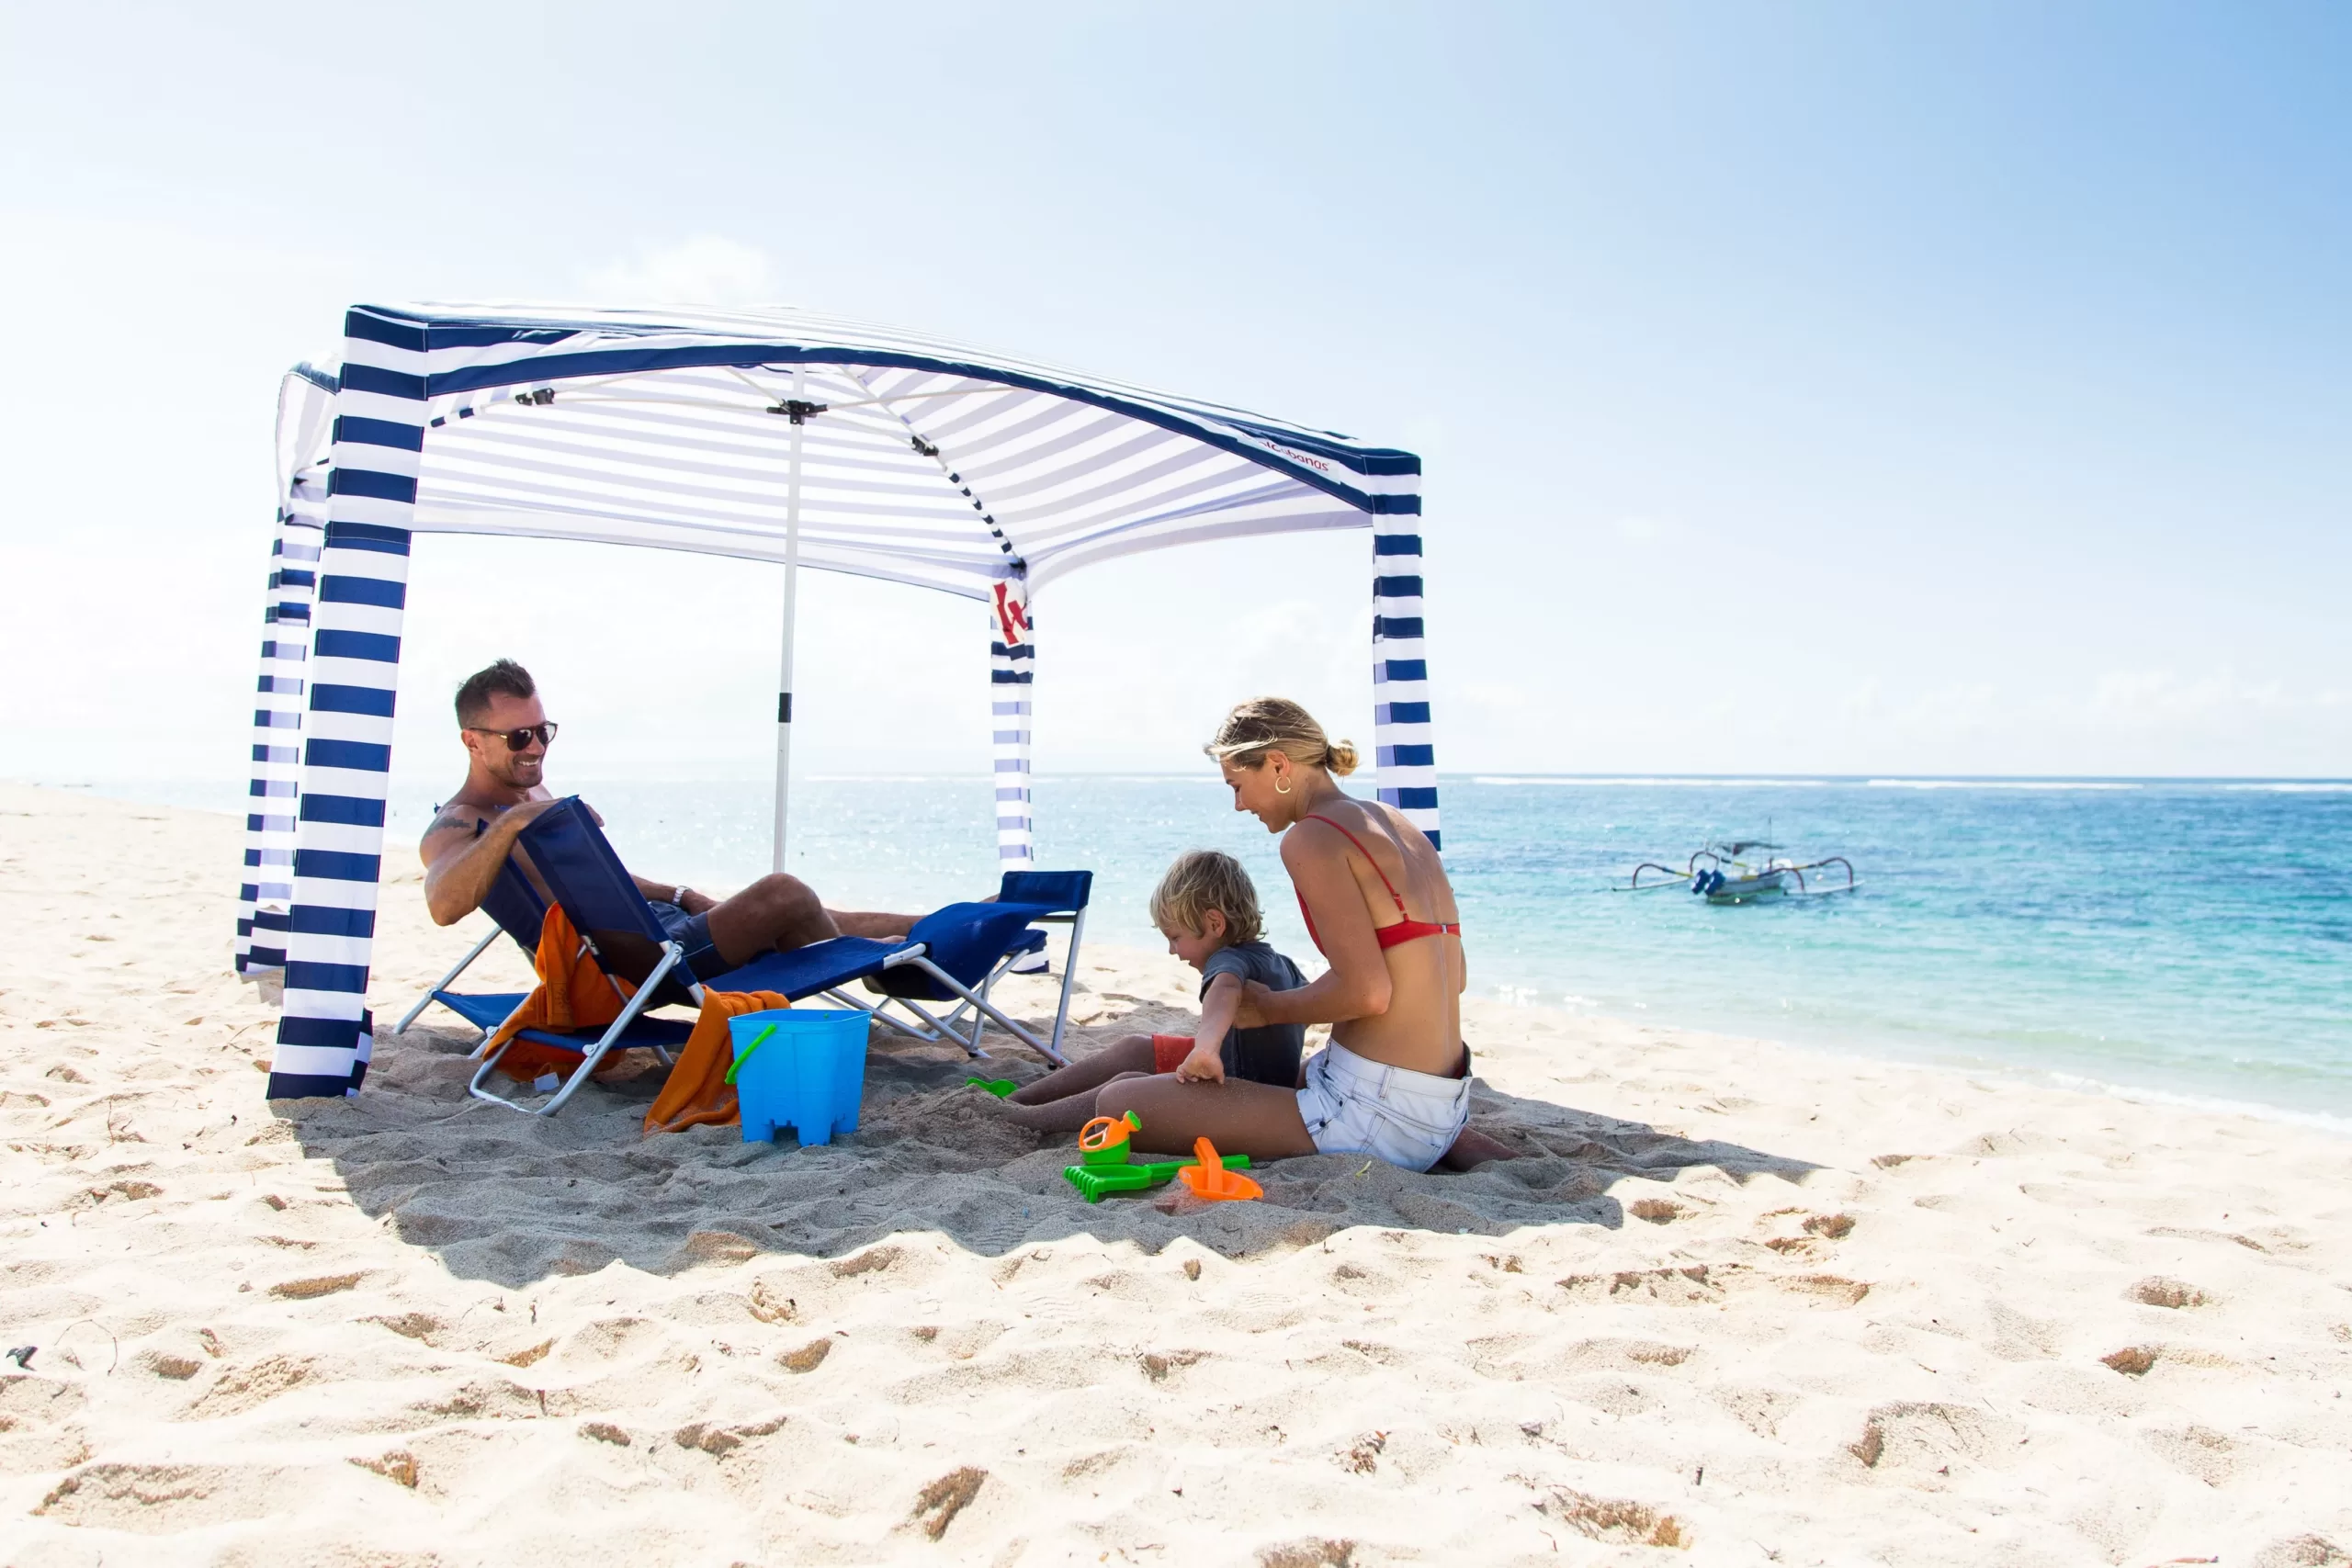 CoolCabanas Review | The World’s Best Beach Cabana